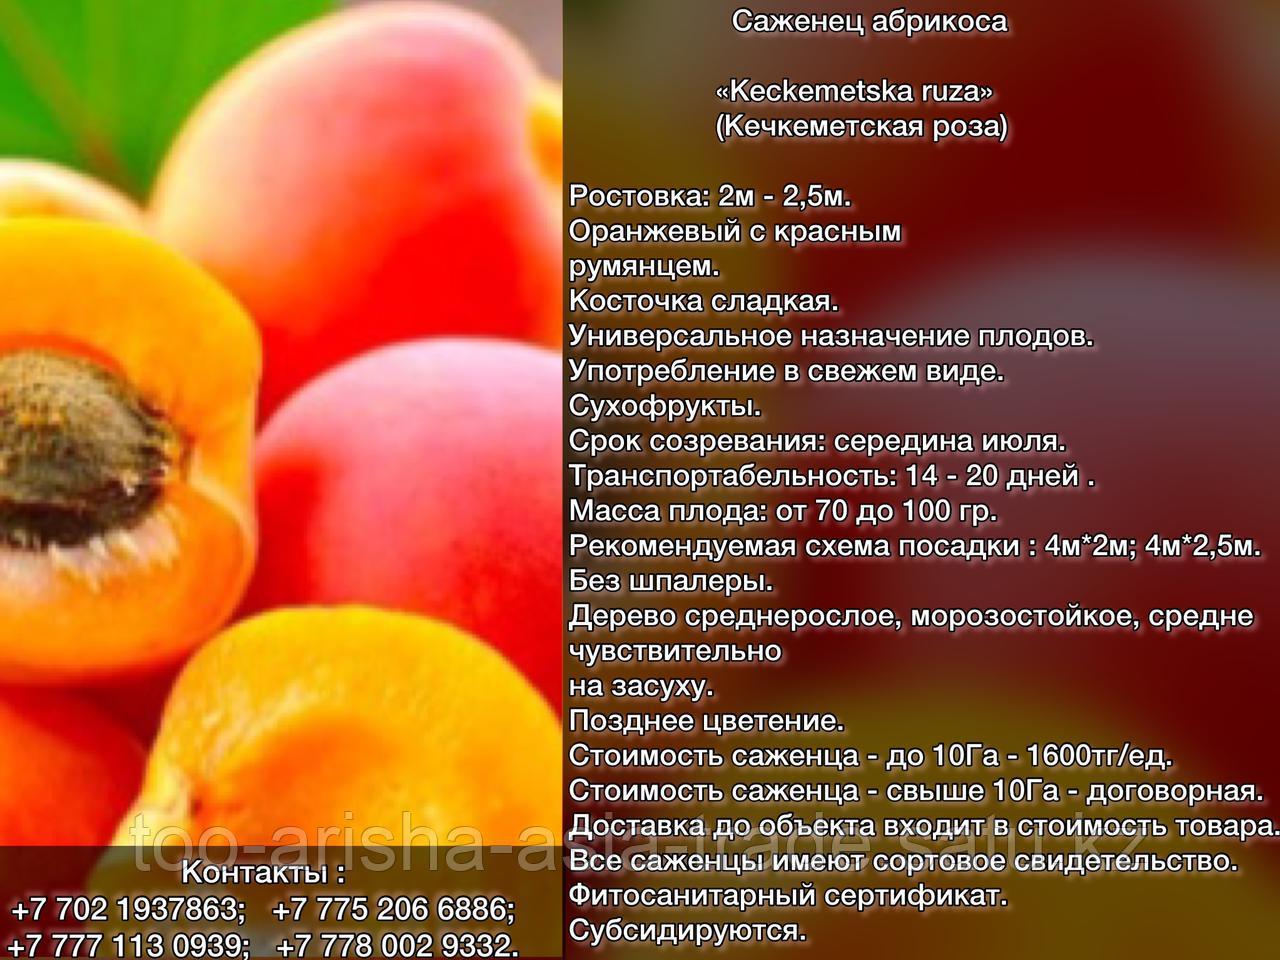 Саженец абрикоса    «Keckemetska ruza» (Кечкеметская роза) Сербия